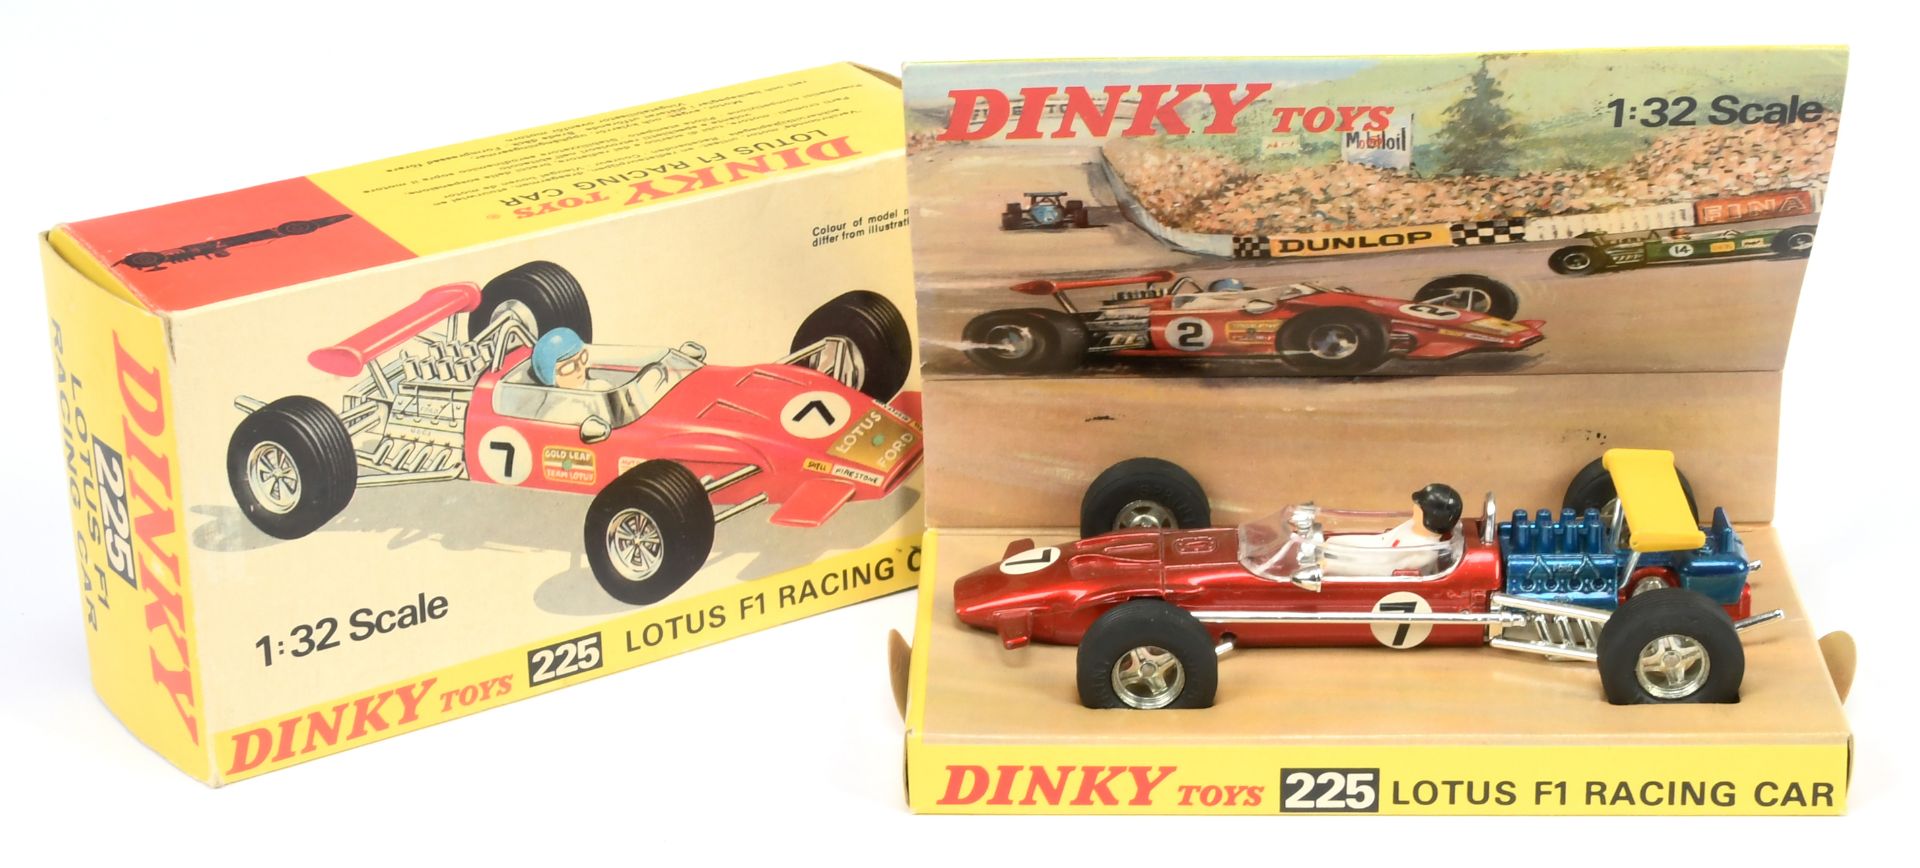 Dinky 225 Lotus F1 Racing Car - Metallic red body, blue engine, yellow rarer spoiler, figure driv...